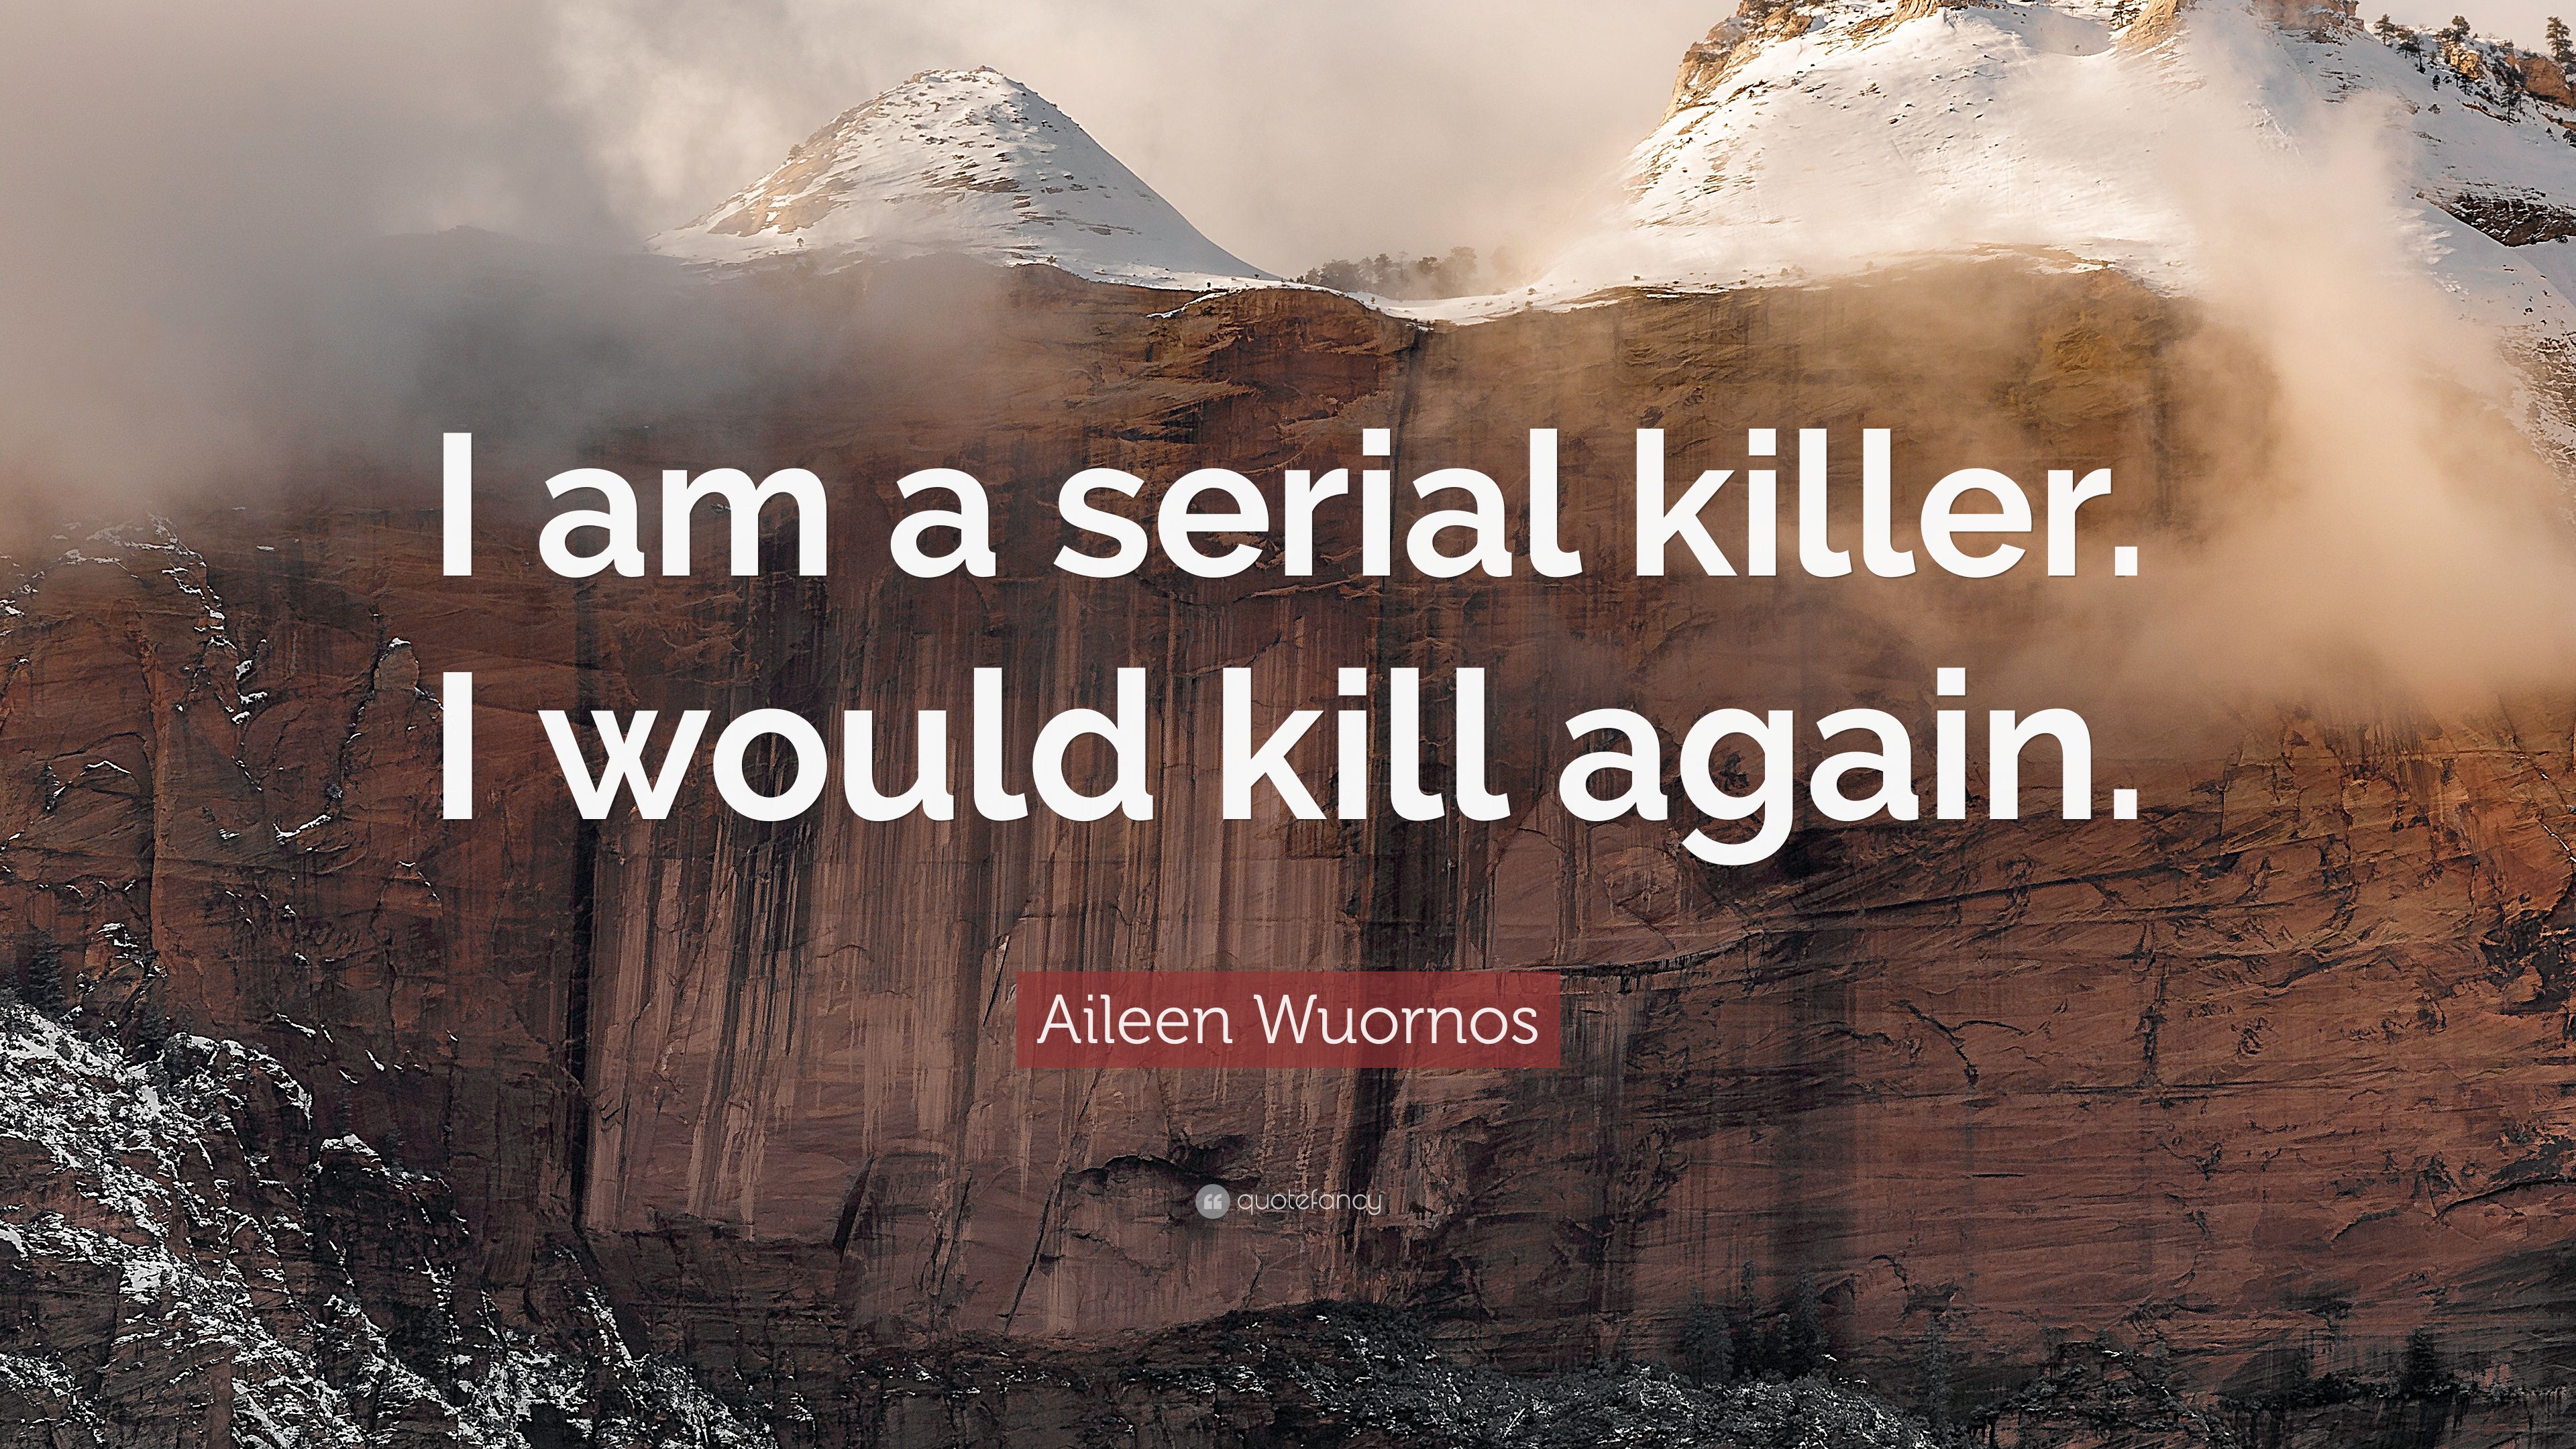 Aileen Wuornos Quote: “I am a serial killer. I would kill again